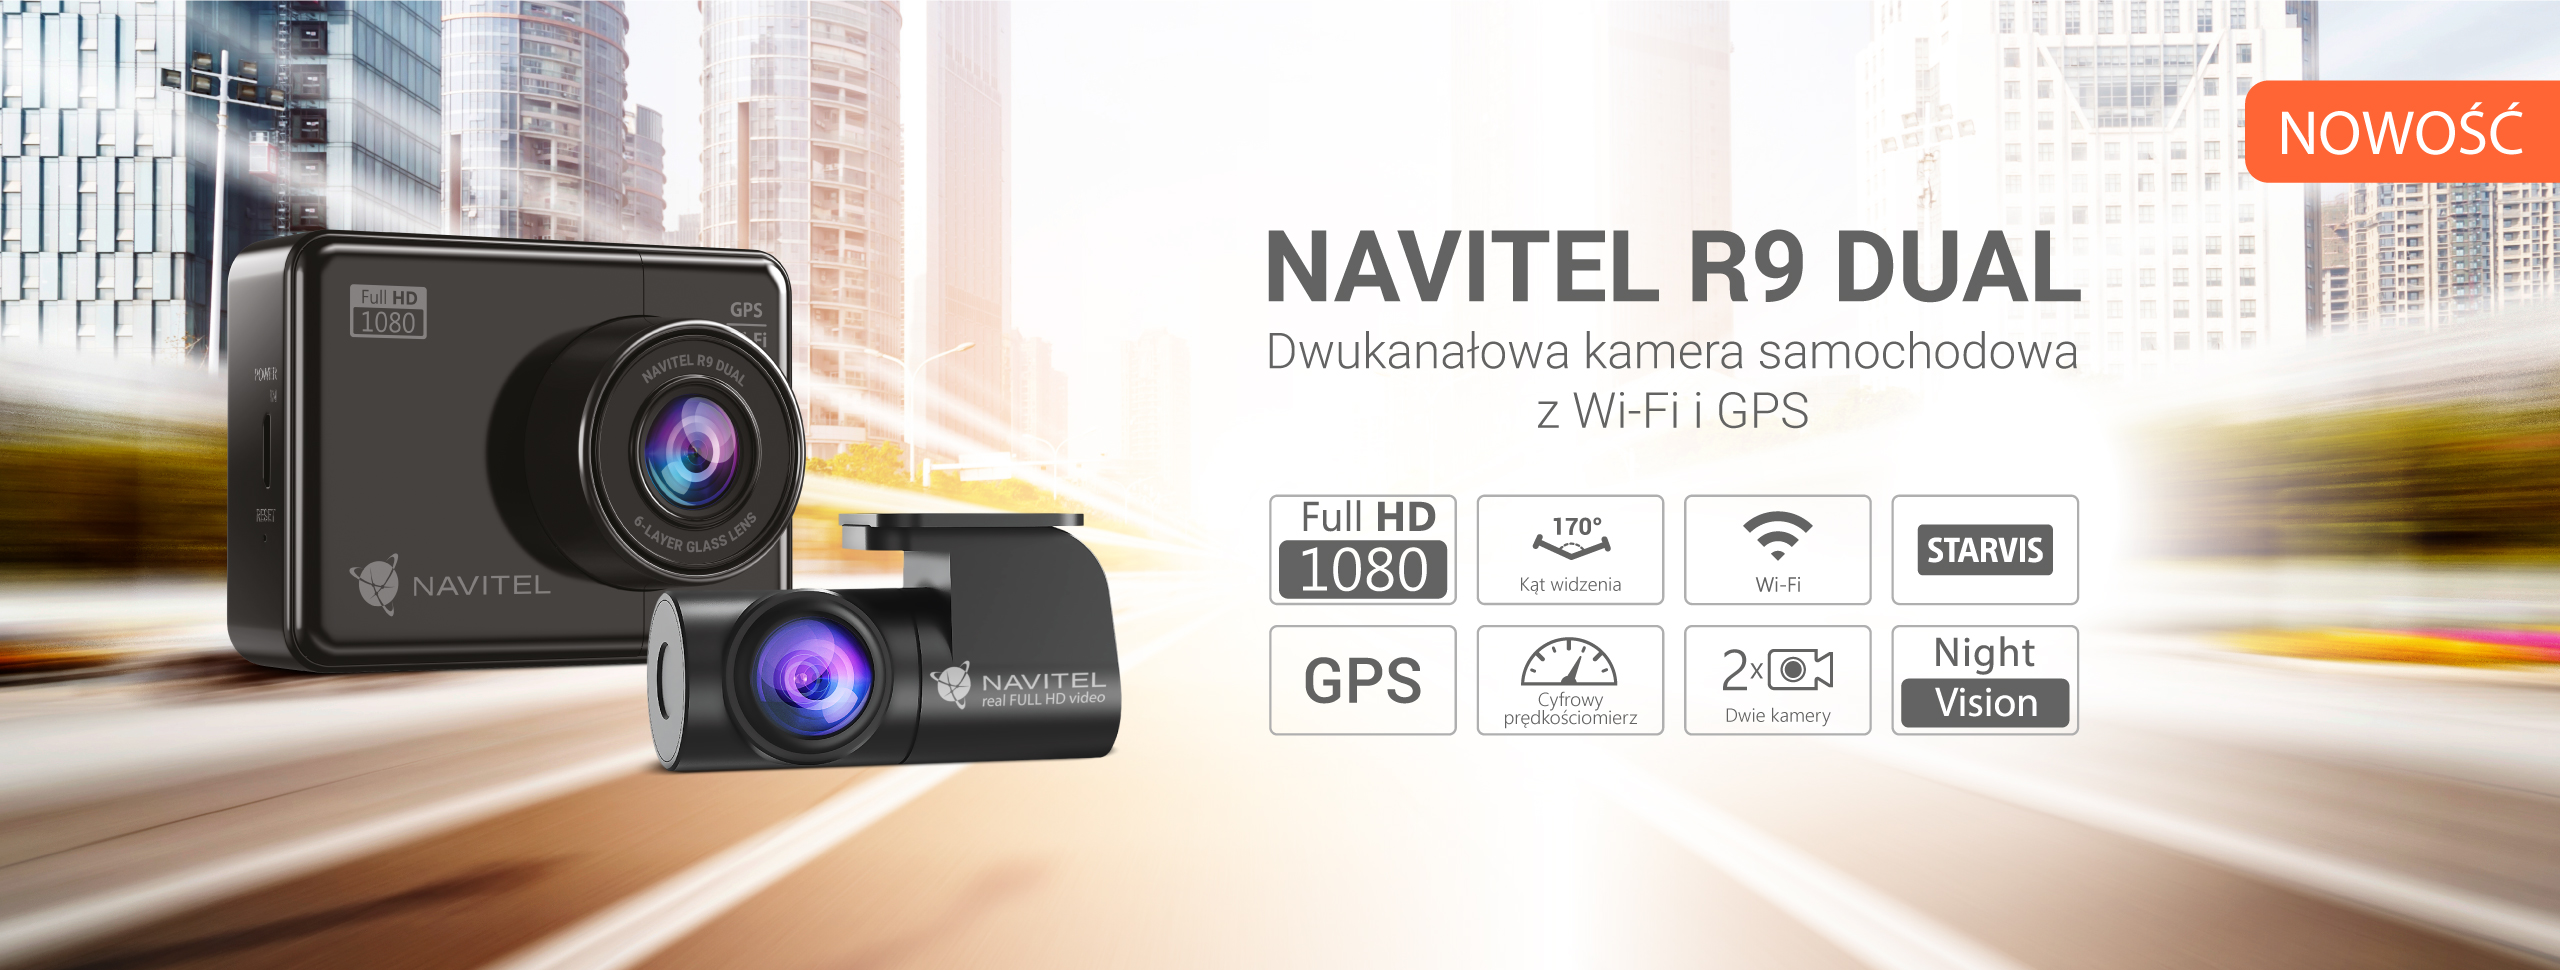 NAVITEL prezentuje nowy model rejestratora – NAVITEL R9 DUAL